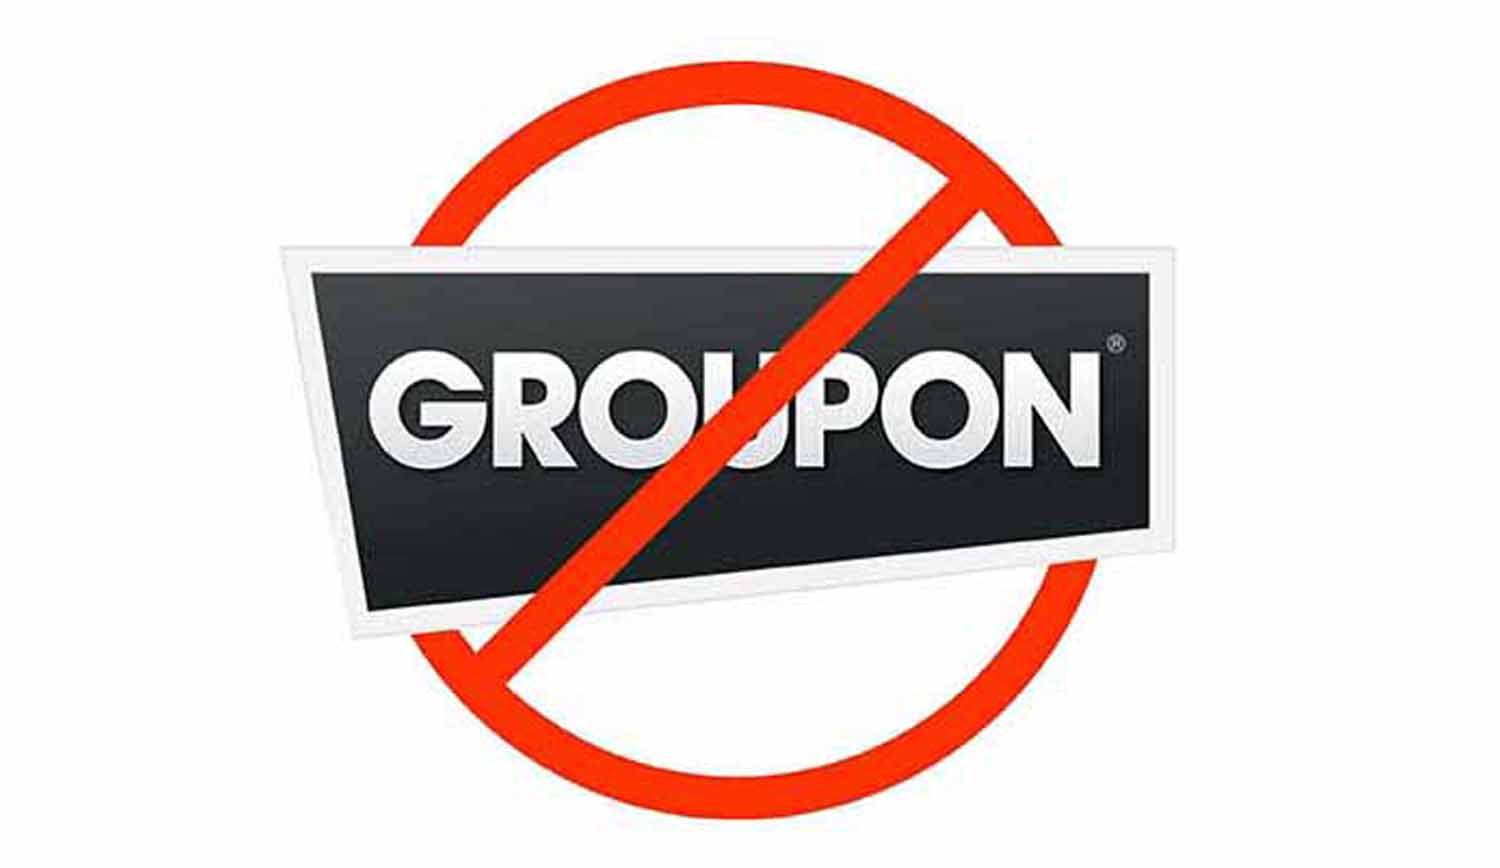 No Groupon Image